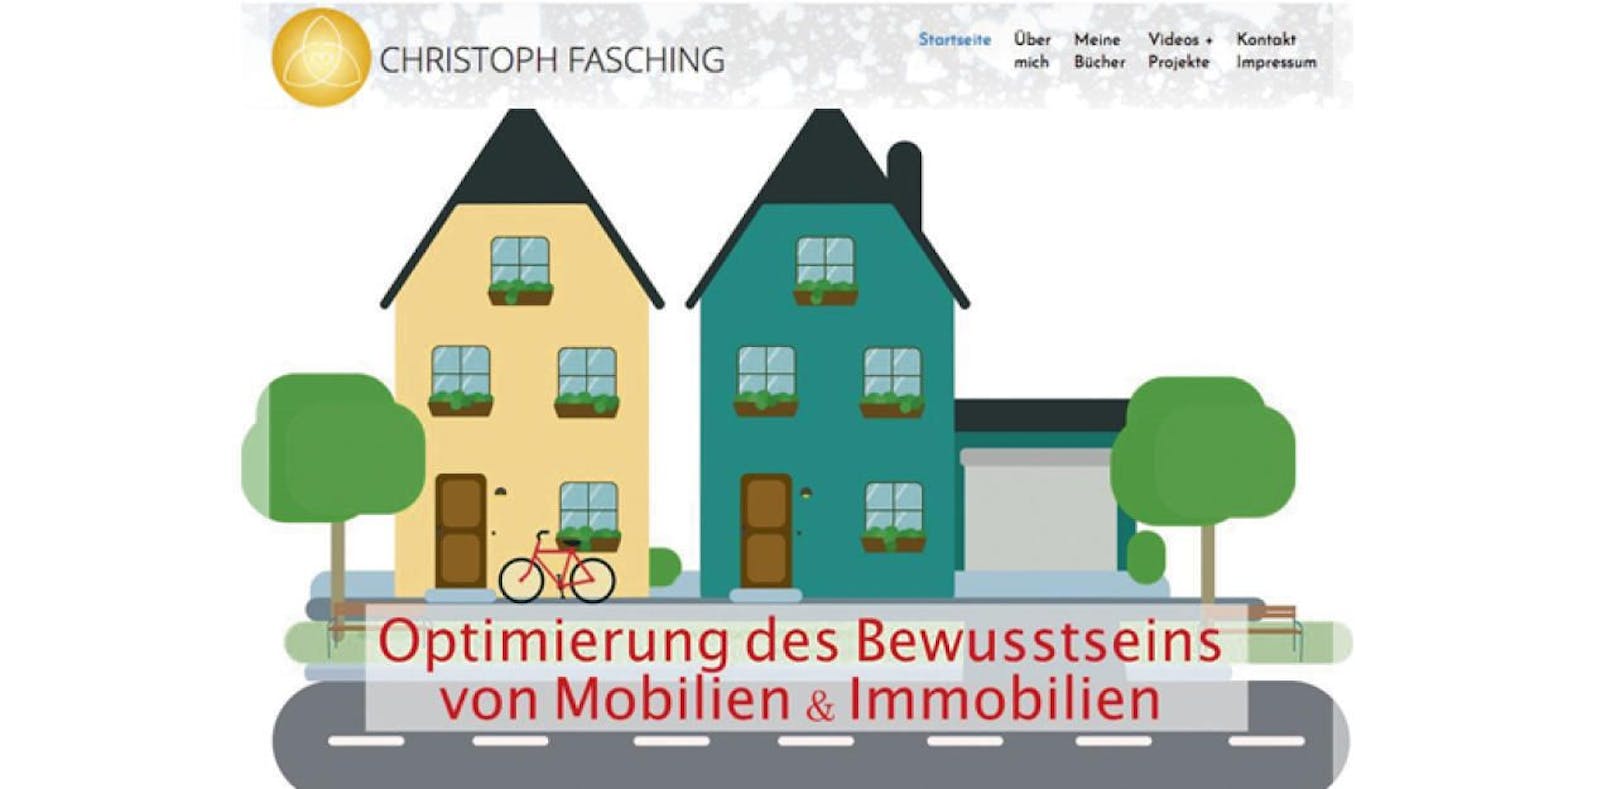 Christoph Faschings Webseite.